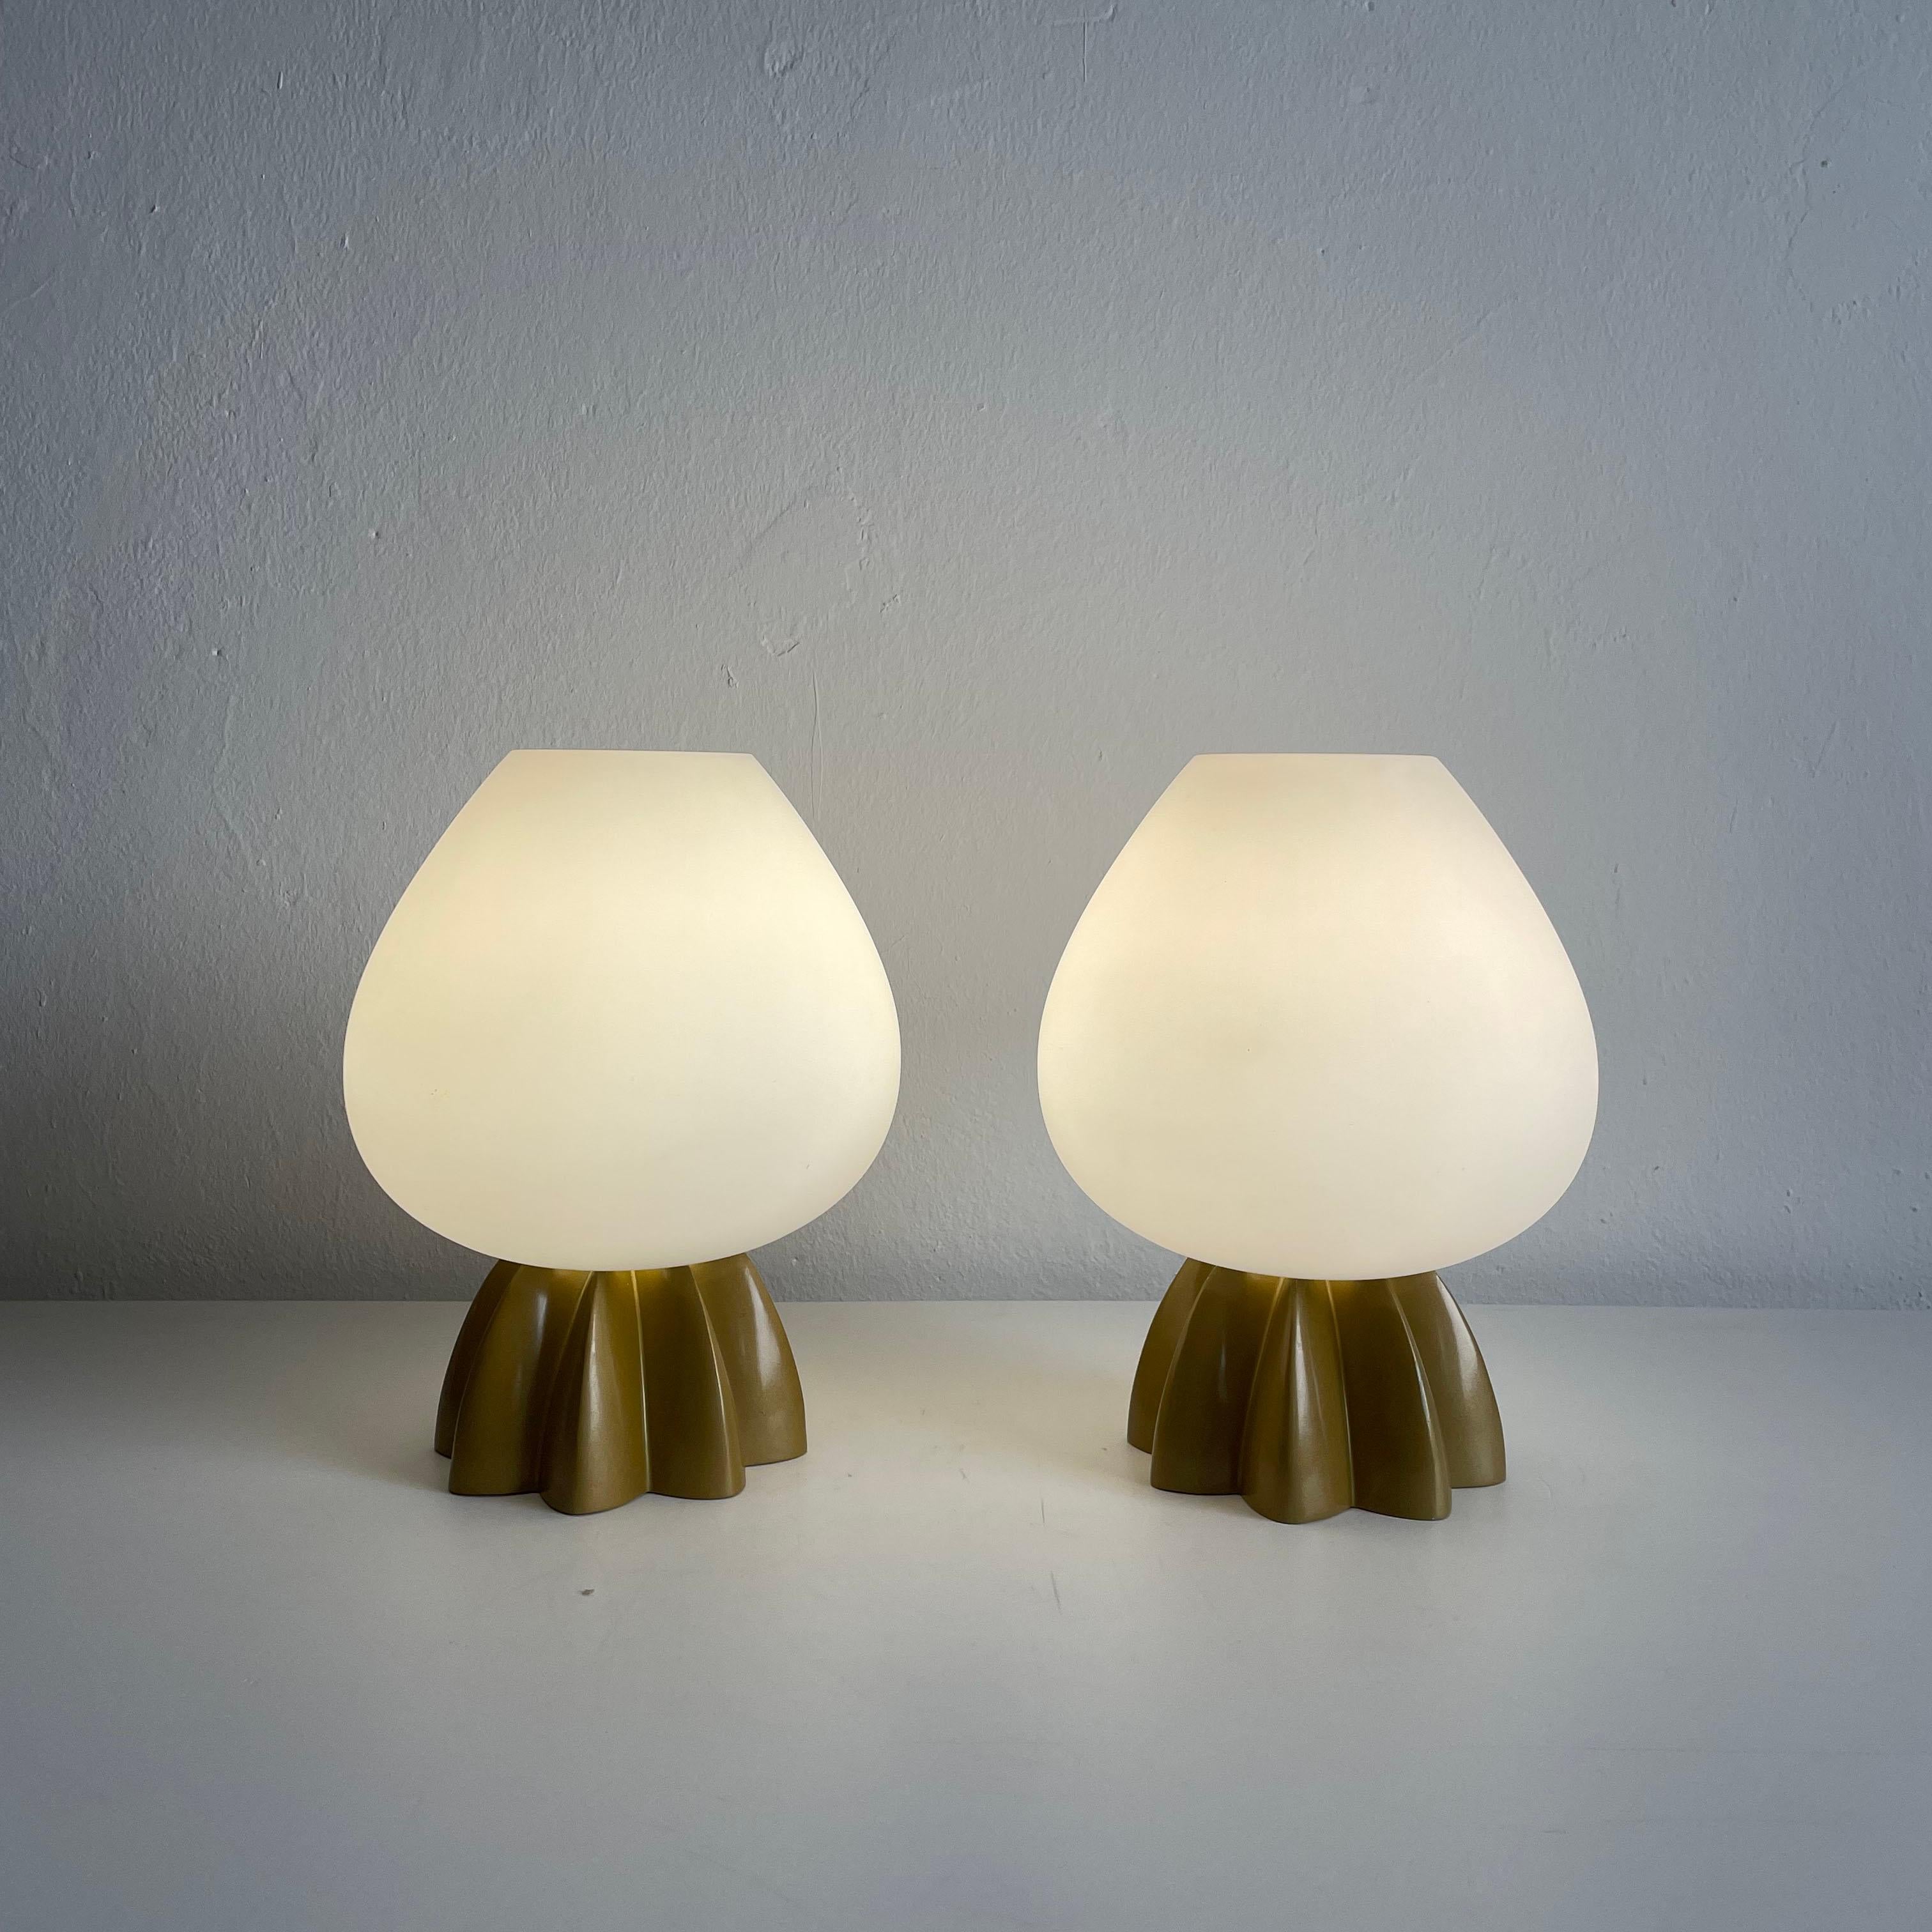 Set of 2 Foscarini Table Lamps, Model Fruits by Rodolfo Dordoni, Italy, 1980s For Sale 11